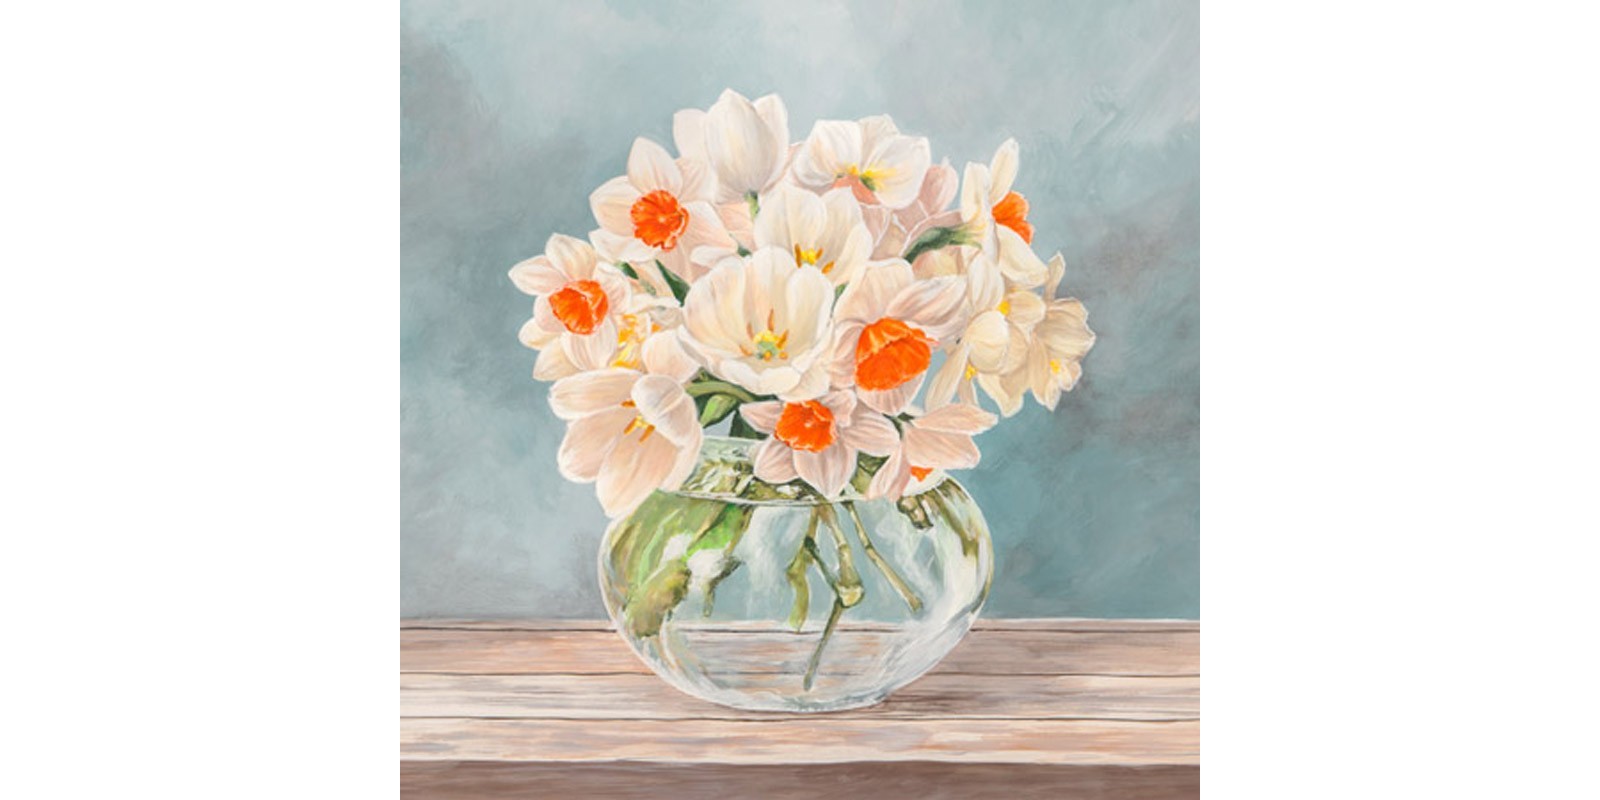 Remy Dellal - Fleurs et Vases Aquamarine II